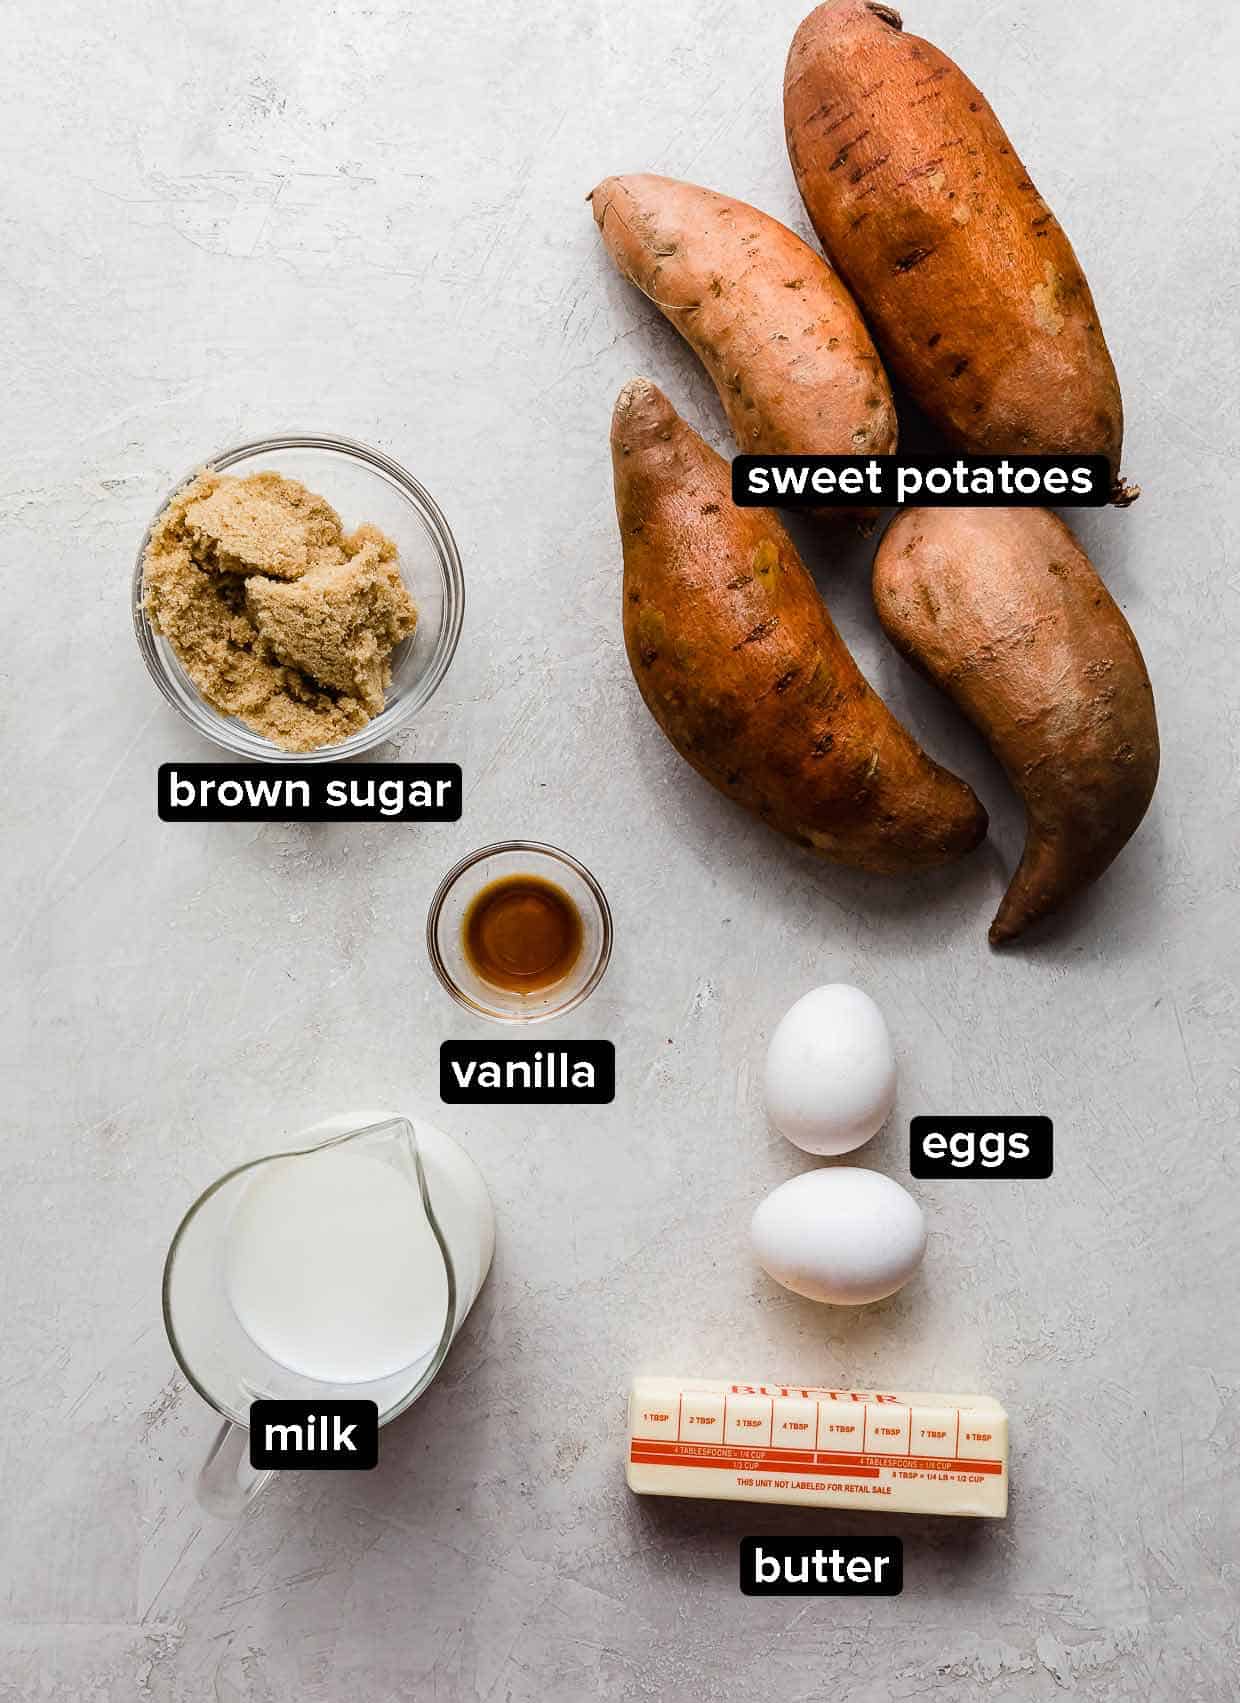 Easy Sweet Potato Casserole ingredients on a light gray background: orange yams, milk, butter, eggs, vanilla, and brown sugar.